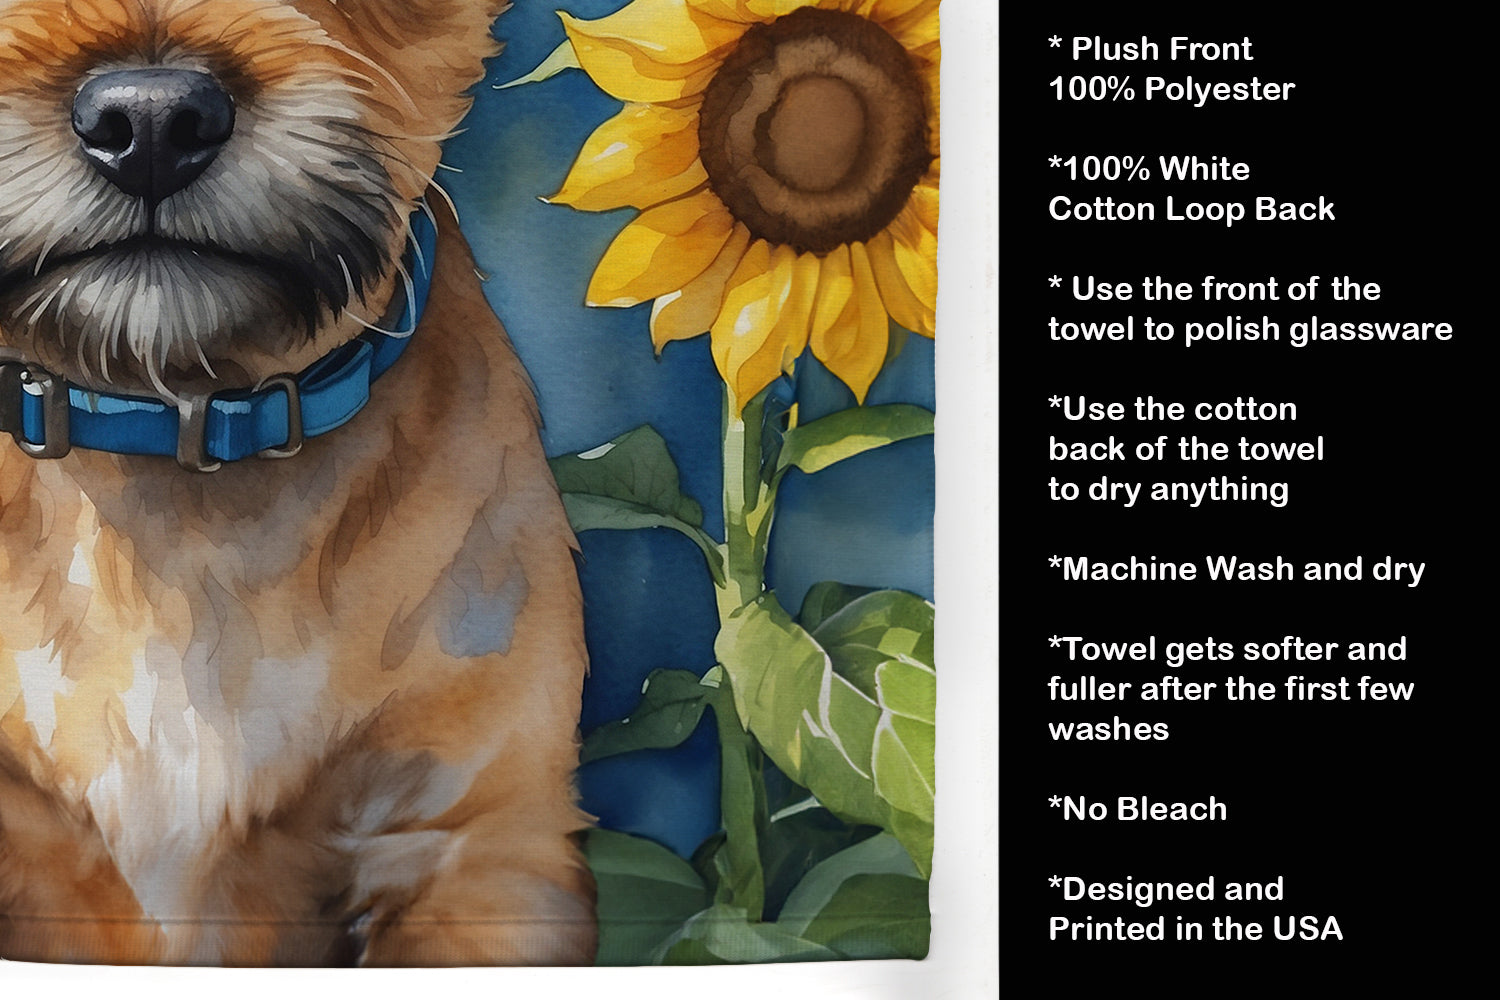 Border Terrier in Sunflowers Kitchen Towel